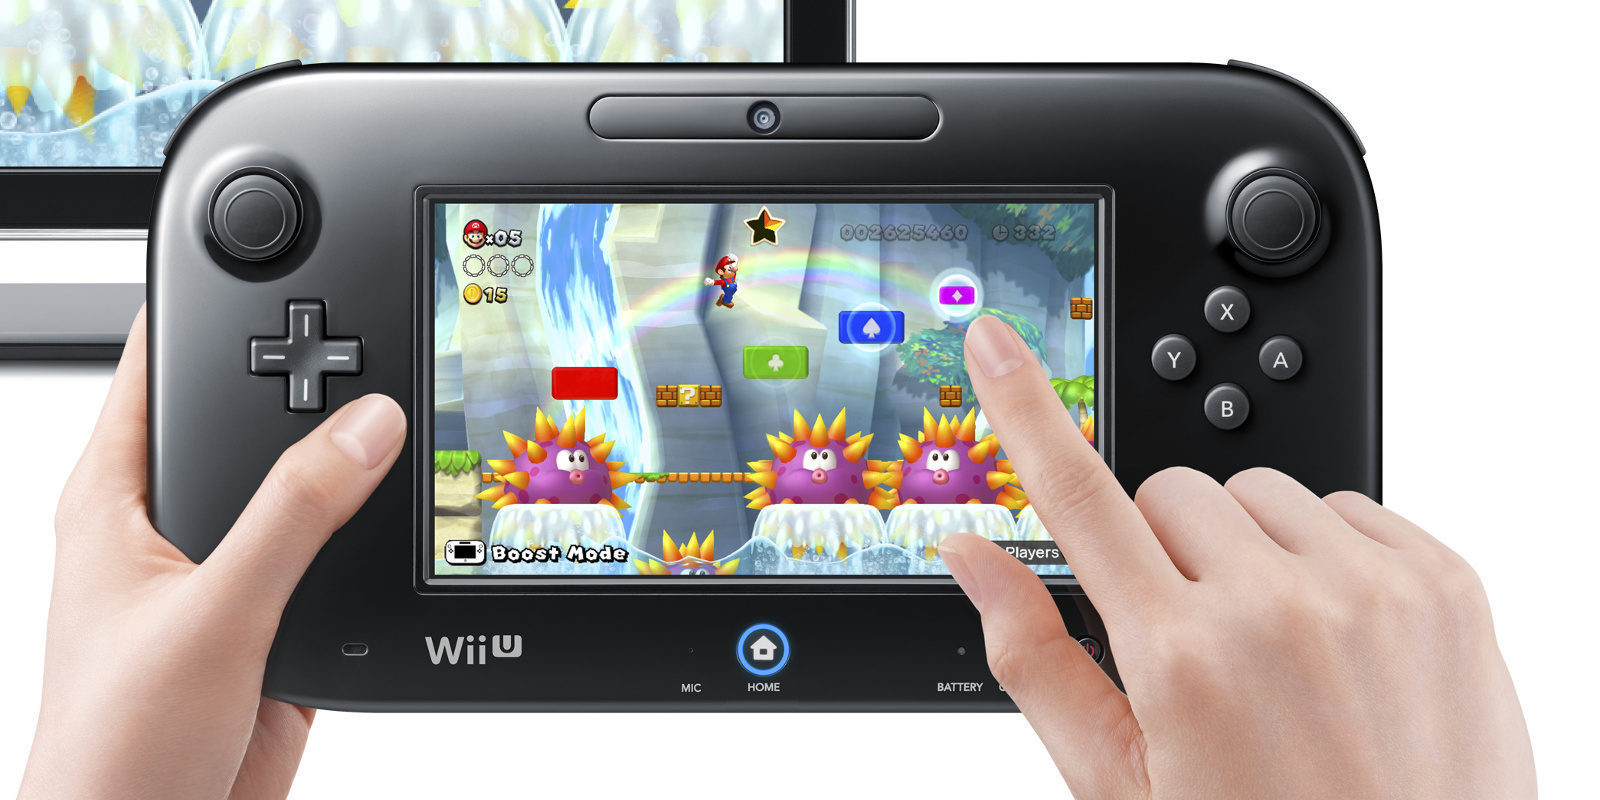 Los 10 errores que mataron a Wii U - Reportaje